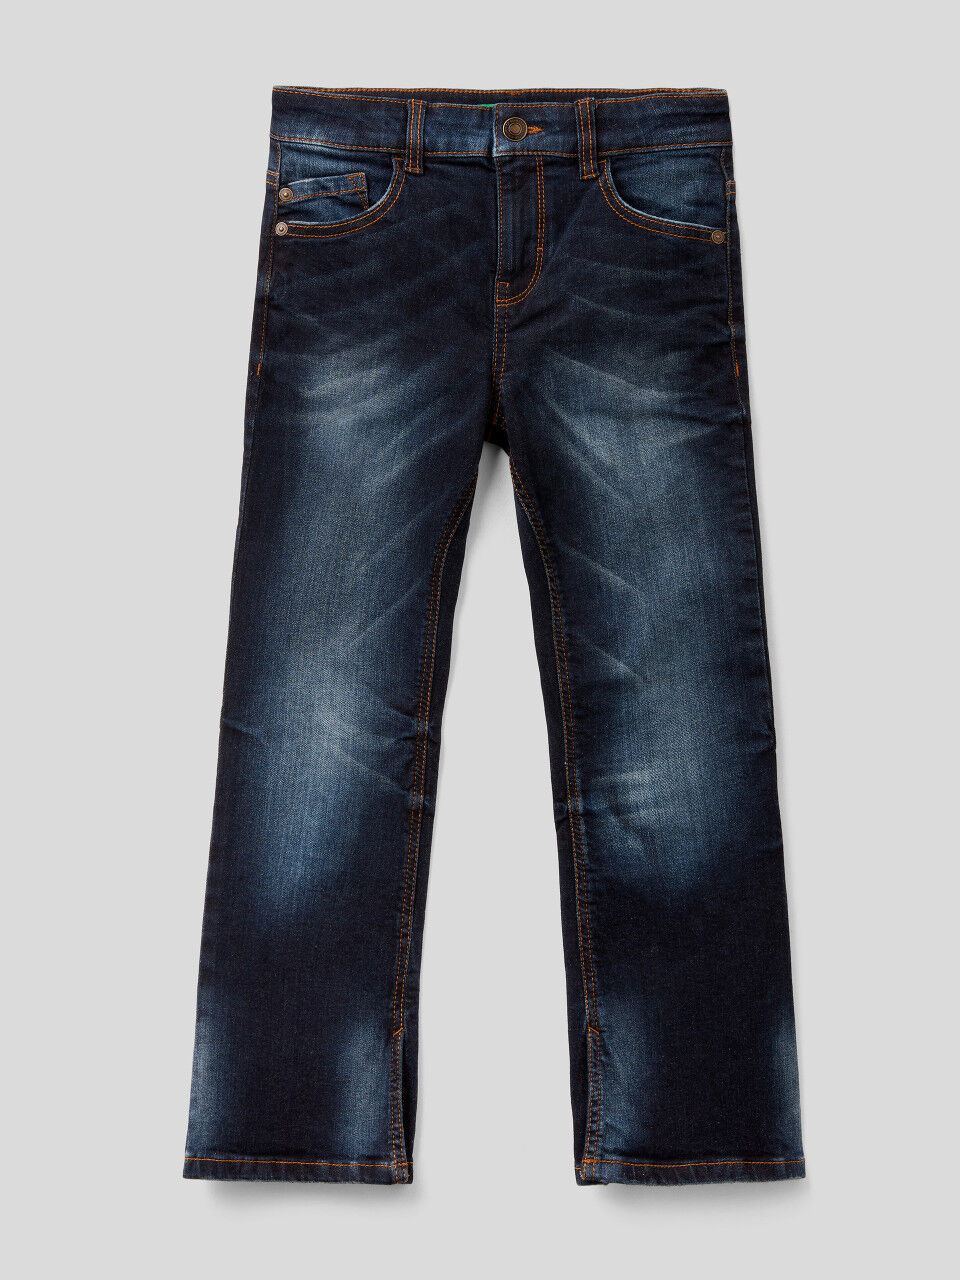 Ladies Denim Jeans Full Length Gray in Chennai at best price by Avie  Garments - Justdial